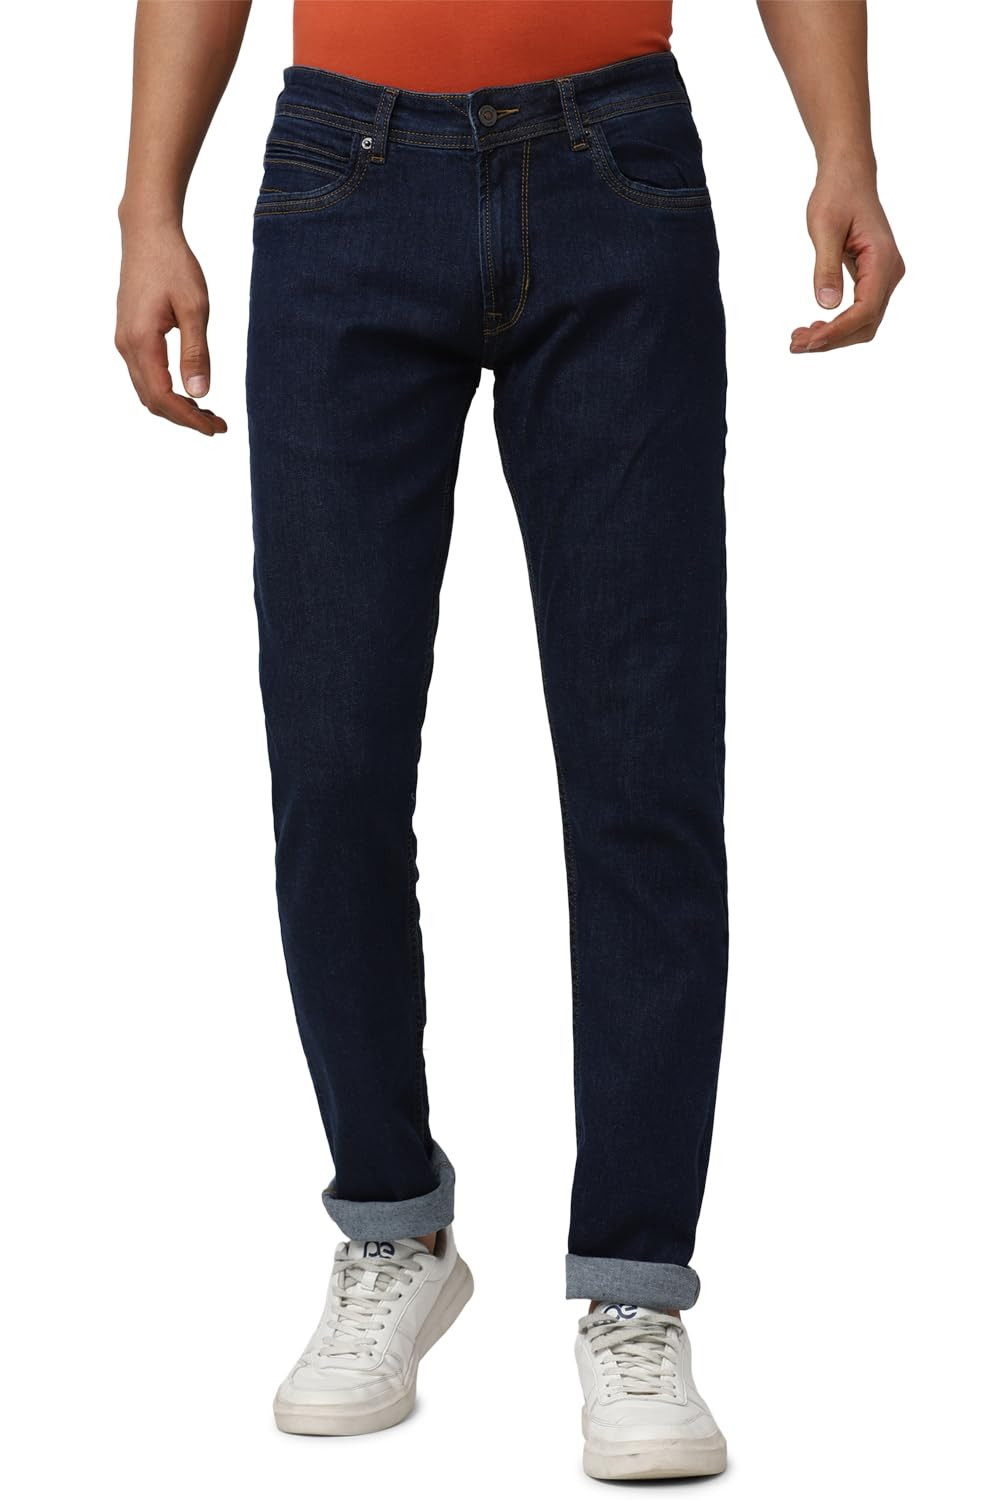 Buy PETER ENGLAND JEANS Men's Slim Pants (PETFWSSBT76119_Light Grey at  Amazon.in